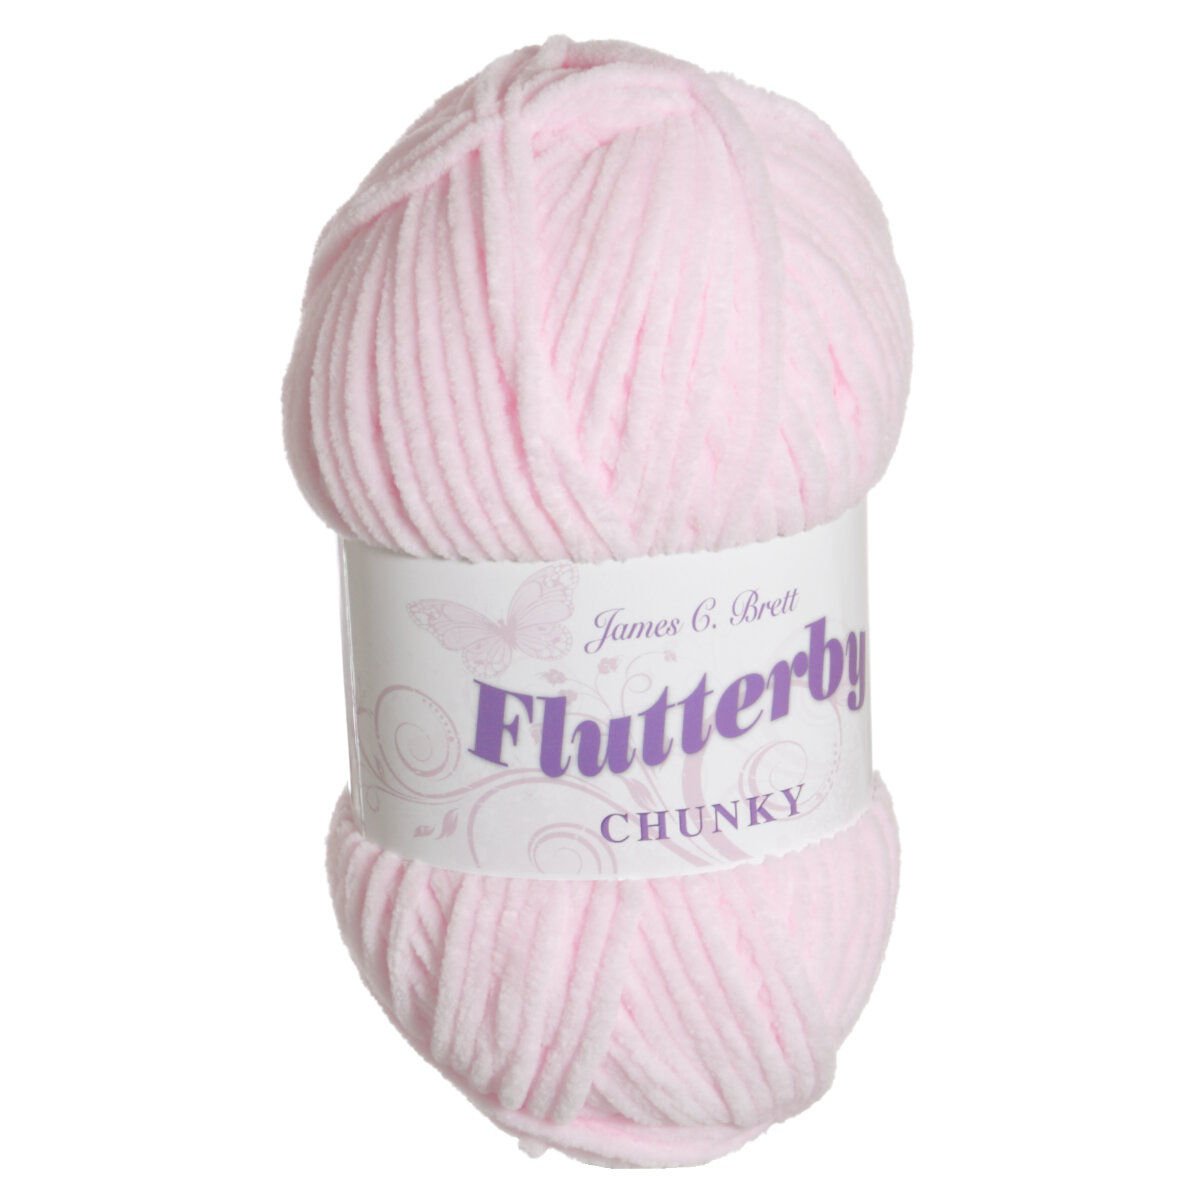 James C Brett Flutterby Chunky Yarn 02 Pink At Jimmy Beans Wool